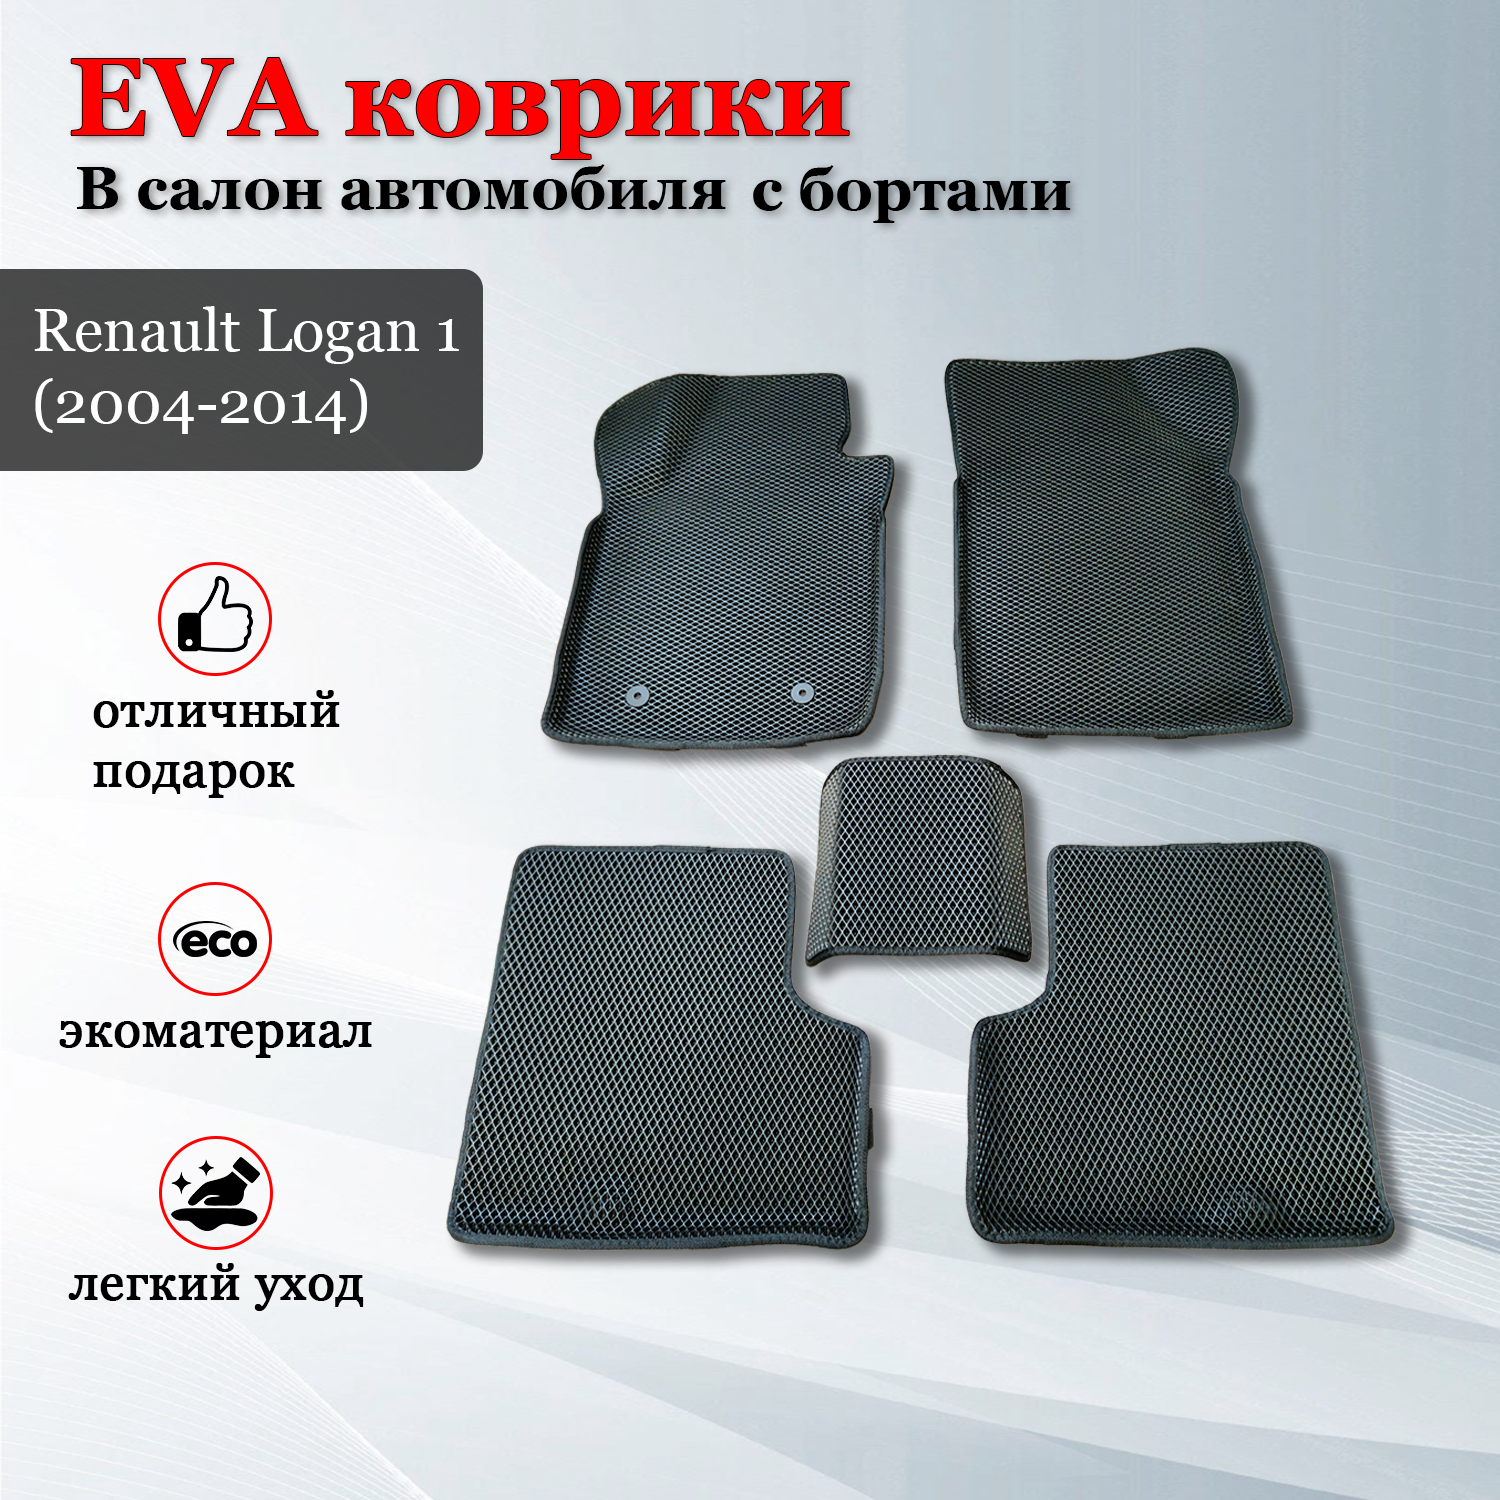 EVA (EВА ЭВА) коврики с бортами в салон автомобиля Рено Логан 1 / Renault Logan 1 (2004-2014)